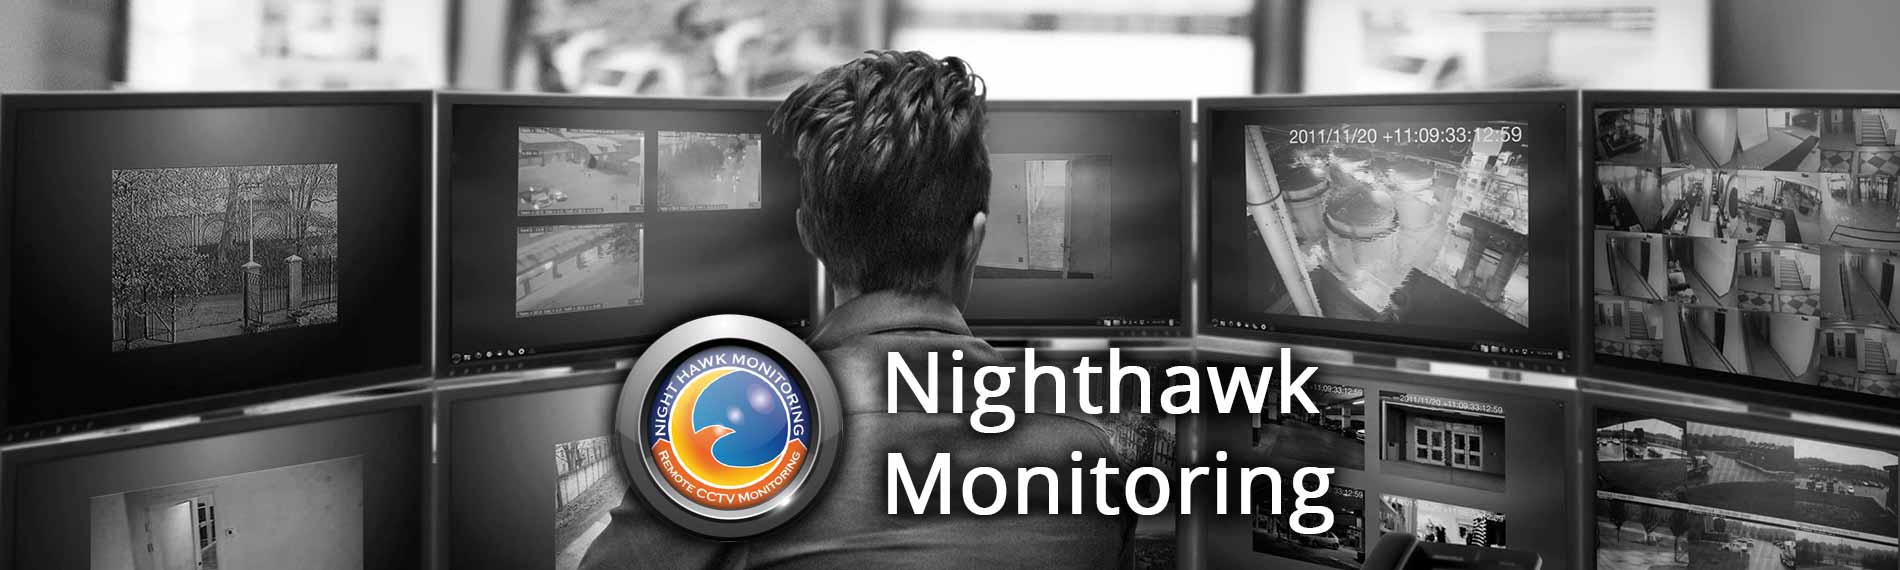 Remote Video Surveillance Sacramento Remote Video Surveillance Monitoring - Live Security Cameras Monitoring Sacramento CA